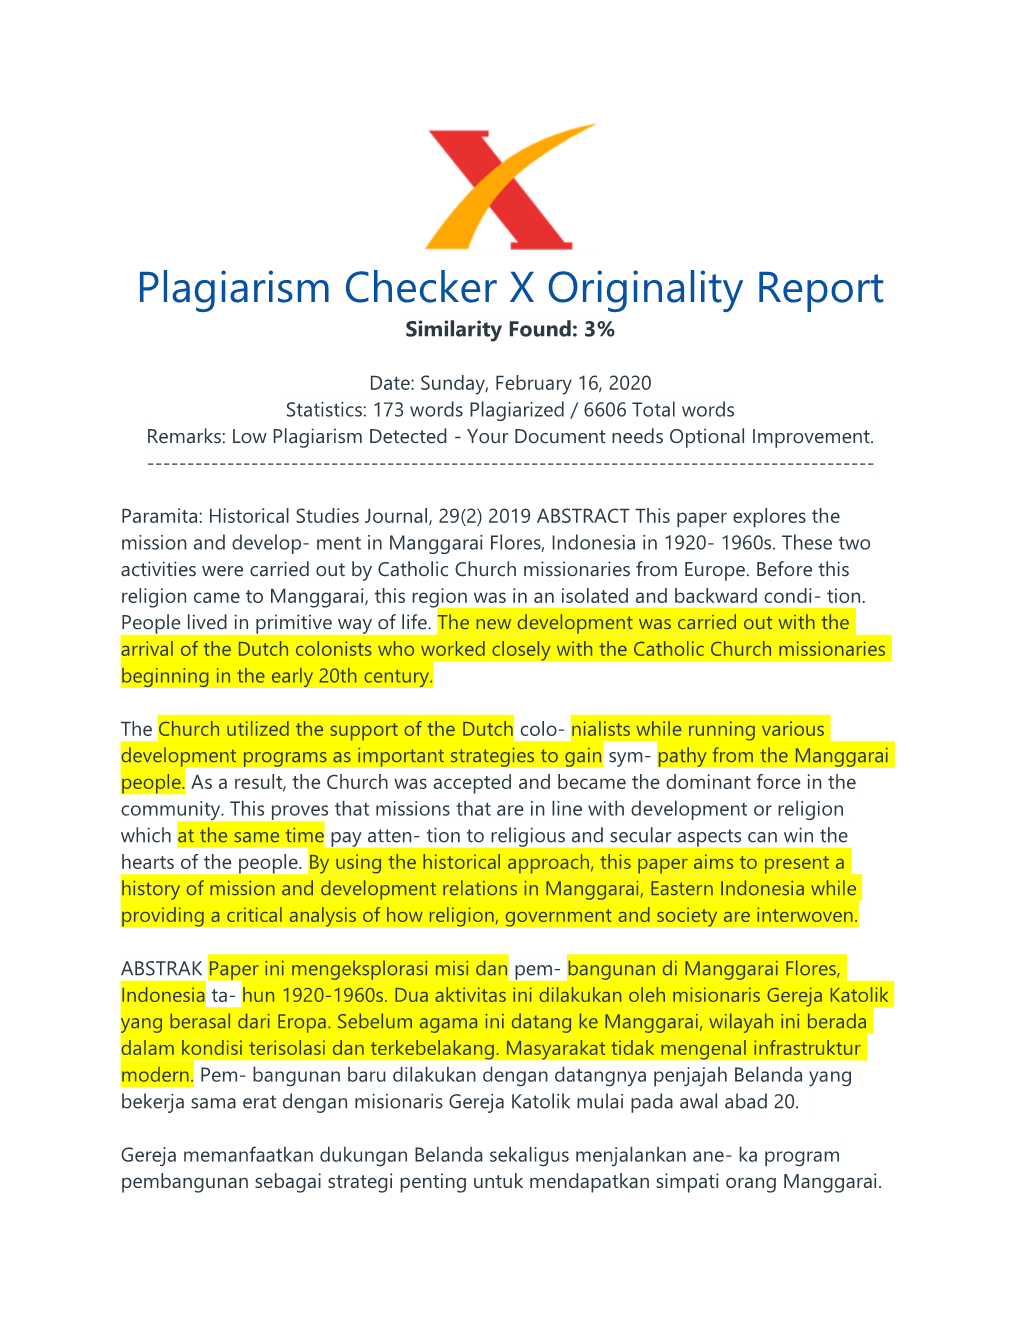 Plagiarism Checker X Originality Report Similarity Found: 3%